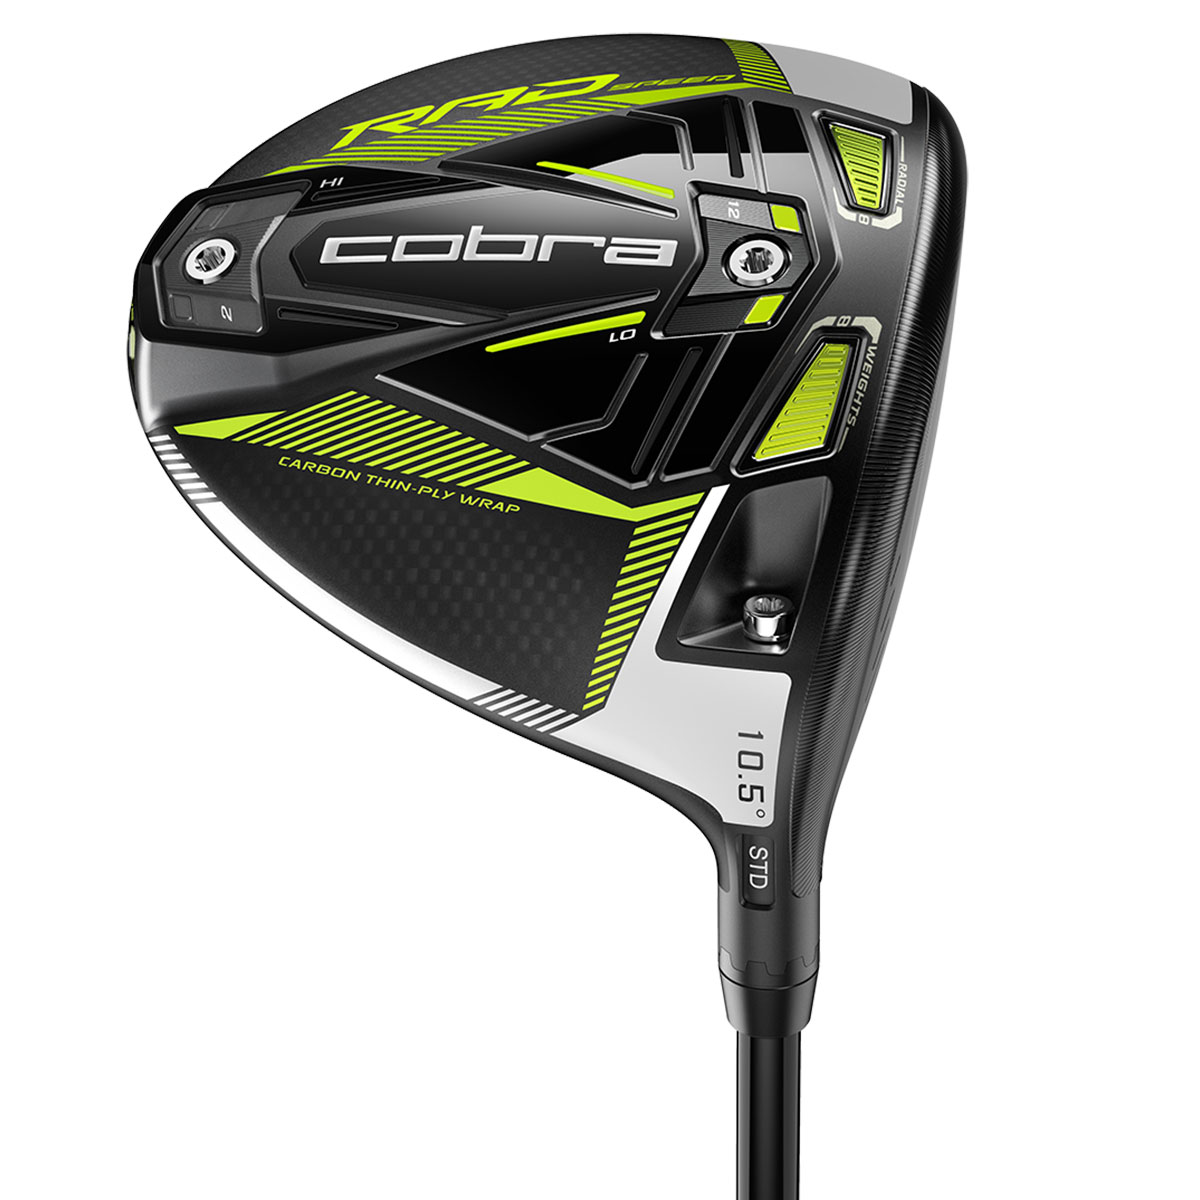 Cobra golf driver